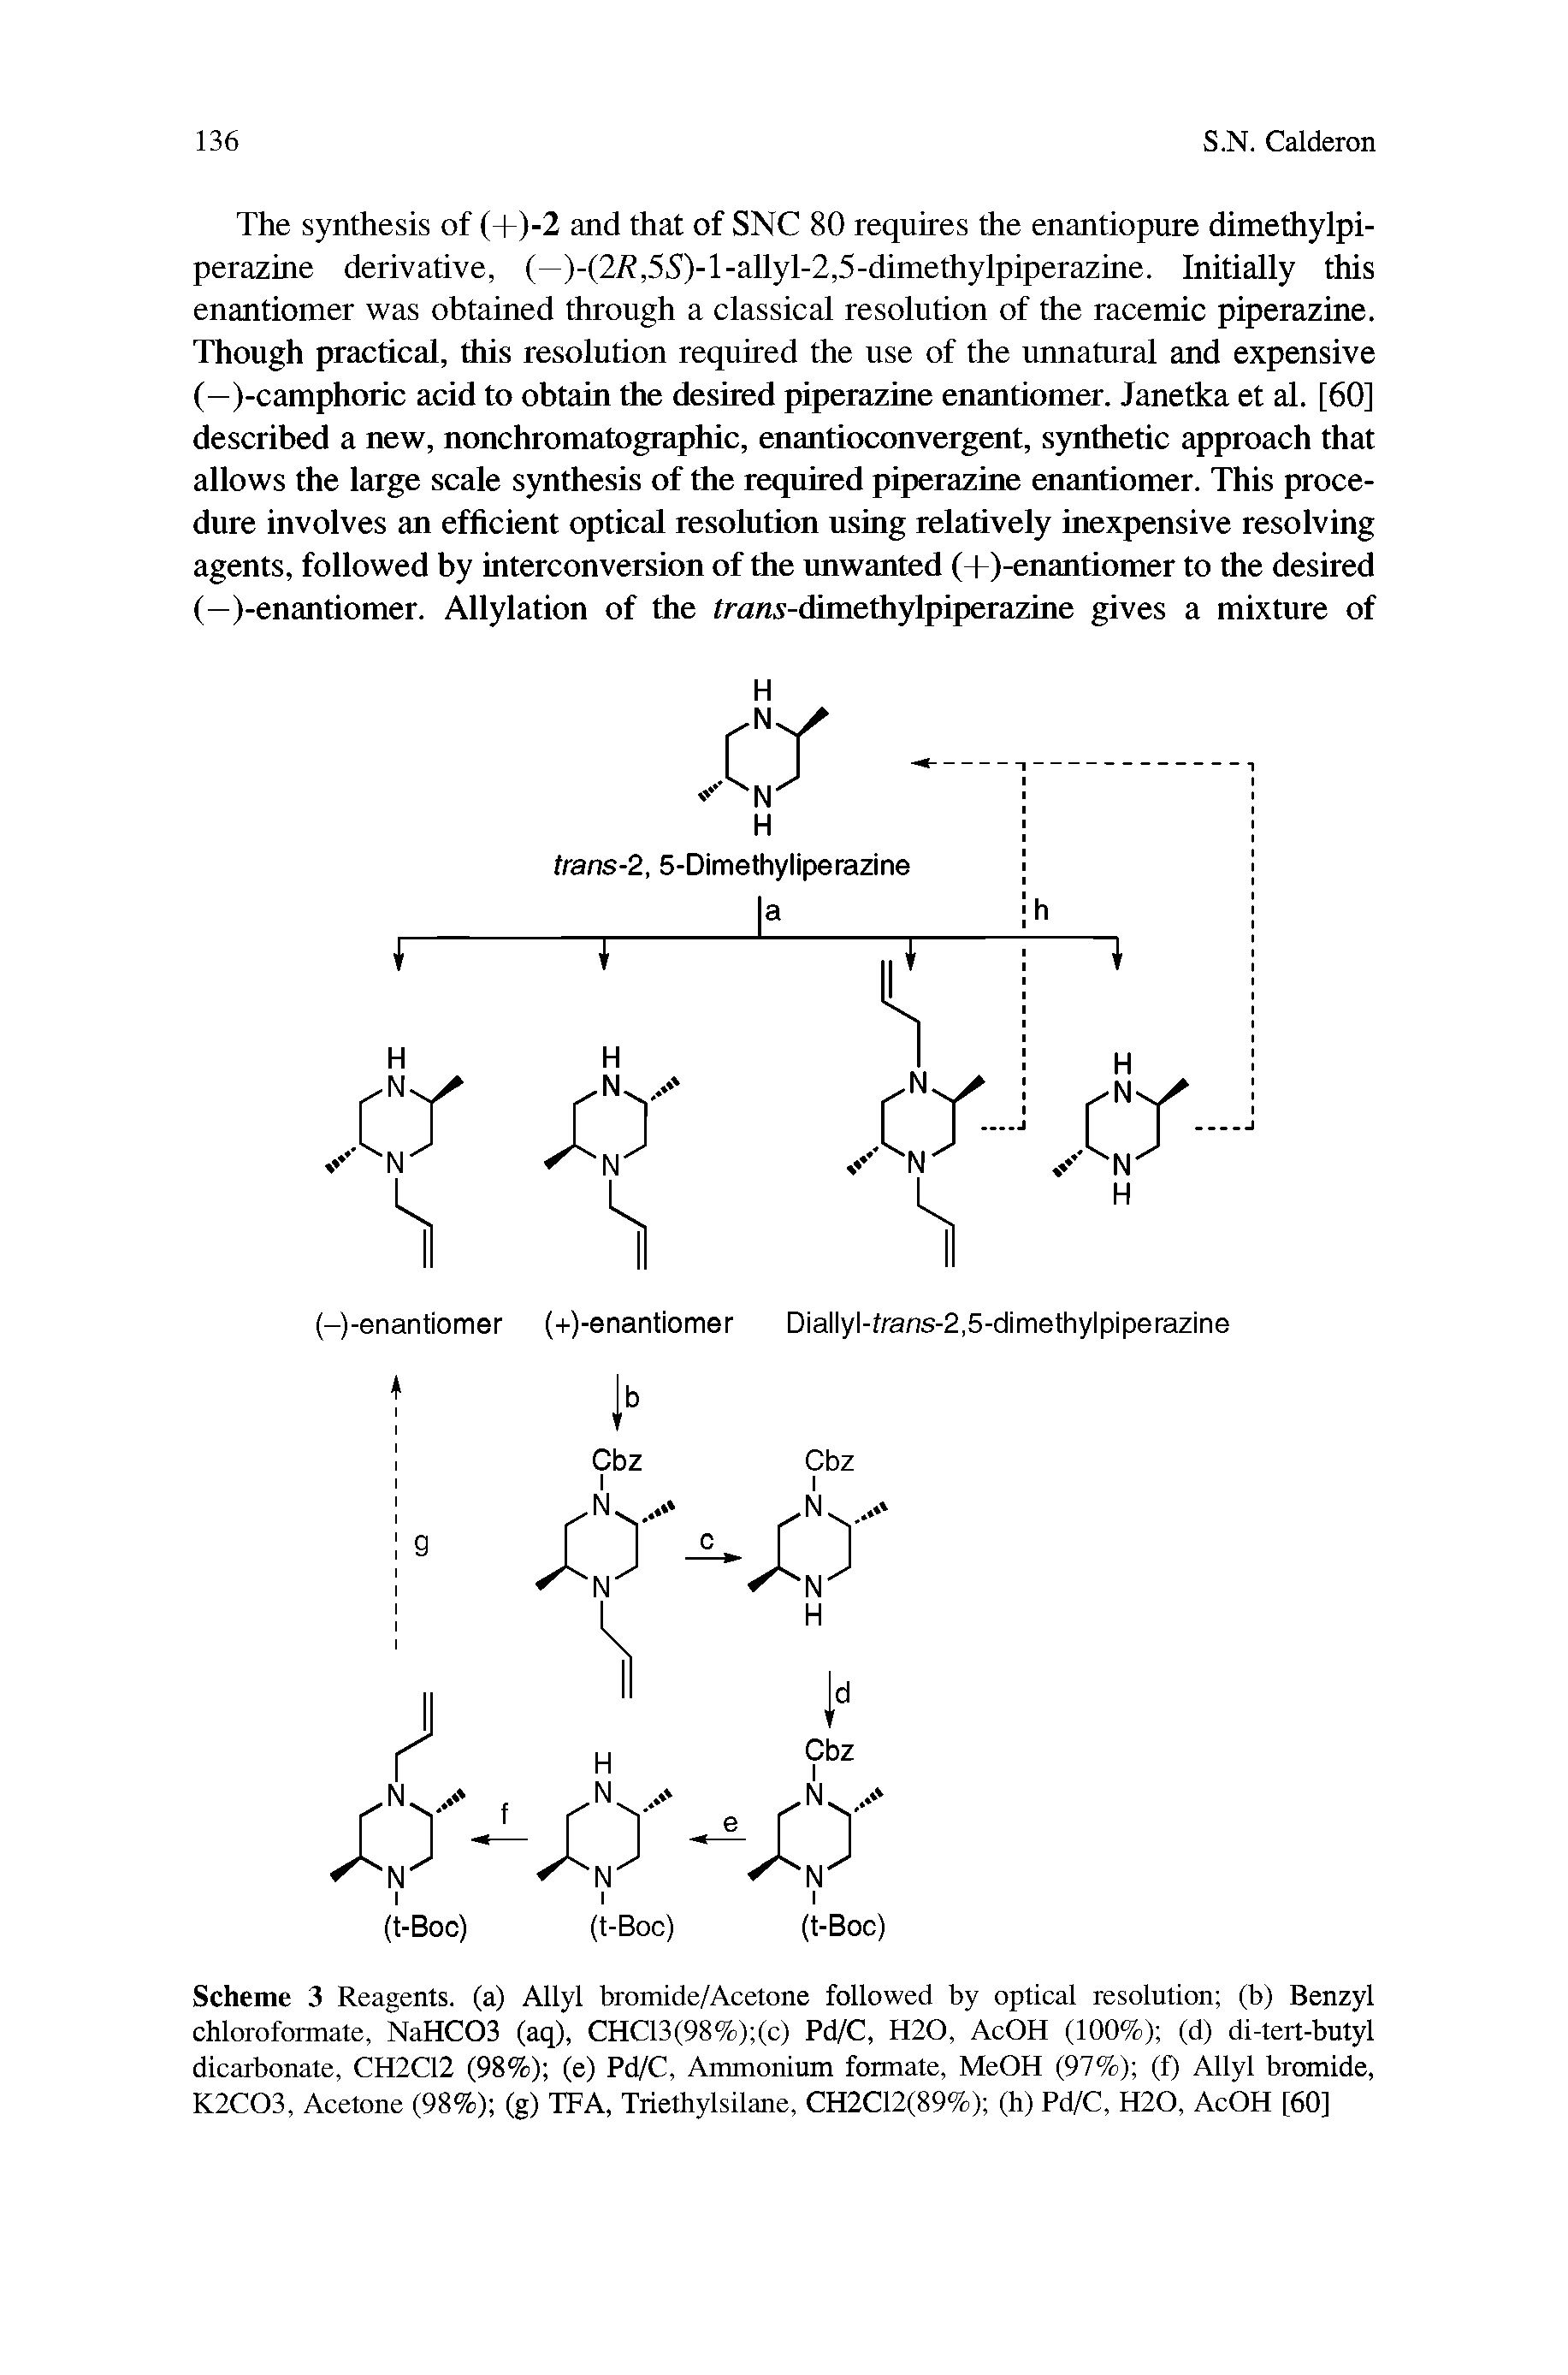 Scheme 3 Reagents, (a) Allyl bromide/Acetone followed by optical resolution (b) Benzyl chloroformate, NaHC03 (aq), CHC13(98%) (c) Pd/C, H20, AcOH (100%) (d) di-tert-butyl dicarbonate, CH2C12 (98%) (e) Pd/C, Ammonium formate, MeOH (97%) (f) Allyl bromide, K2CQ3, Acetone (98%) (g) TFA, Triethylsilane, CH2C12(89%) (h) Pd/C, H2Q, AcOH [60]...